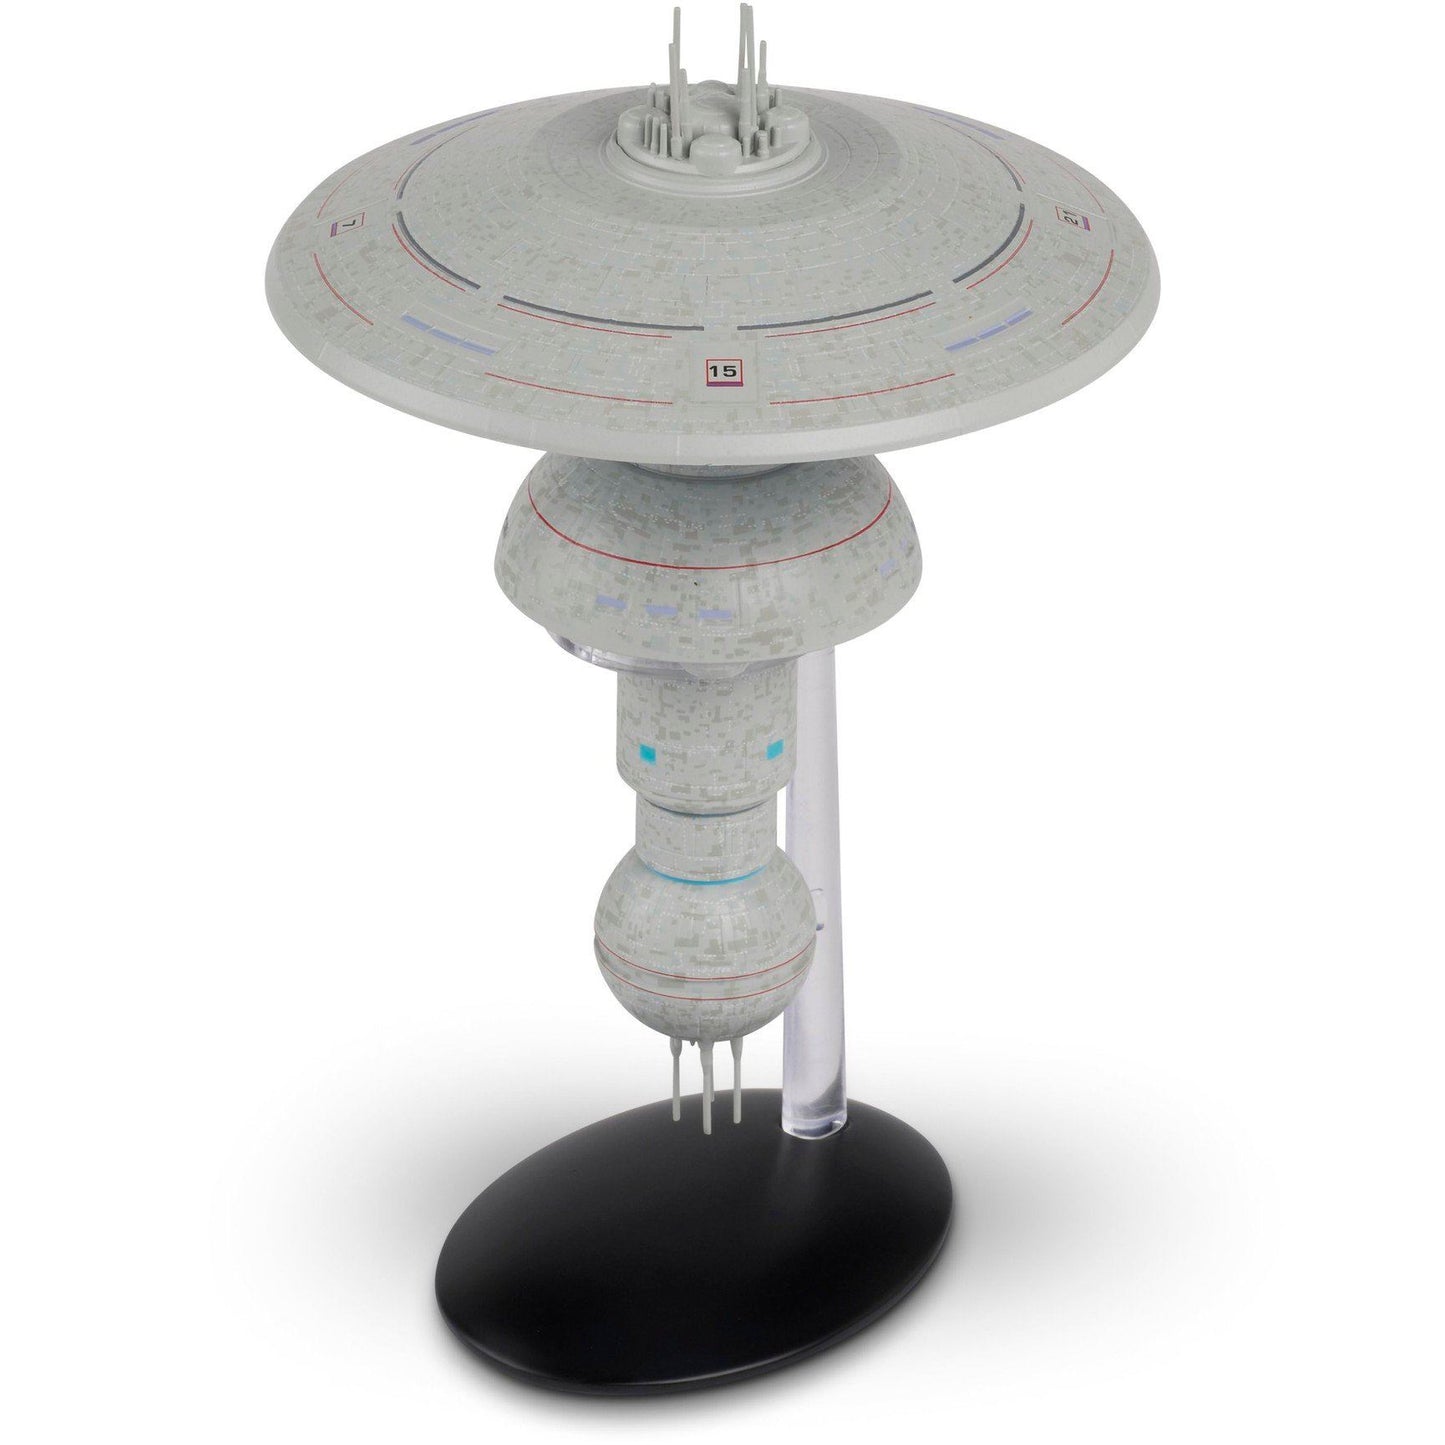 #15 Spacedock Model Die Cast Ship SPECIAL ISSUE (Eaglemoss / Star Trek)